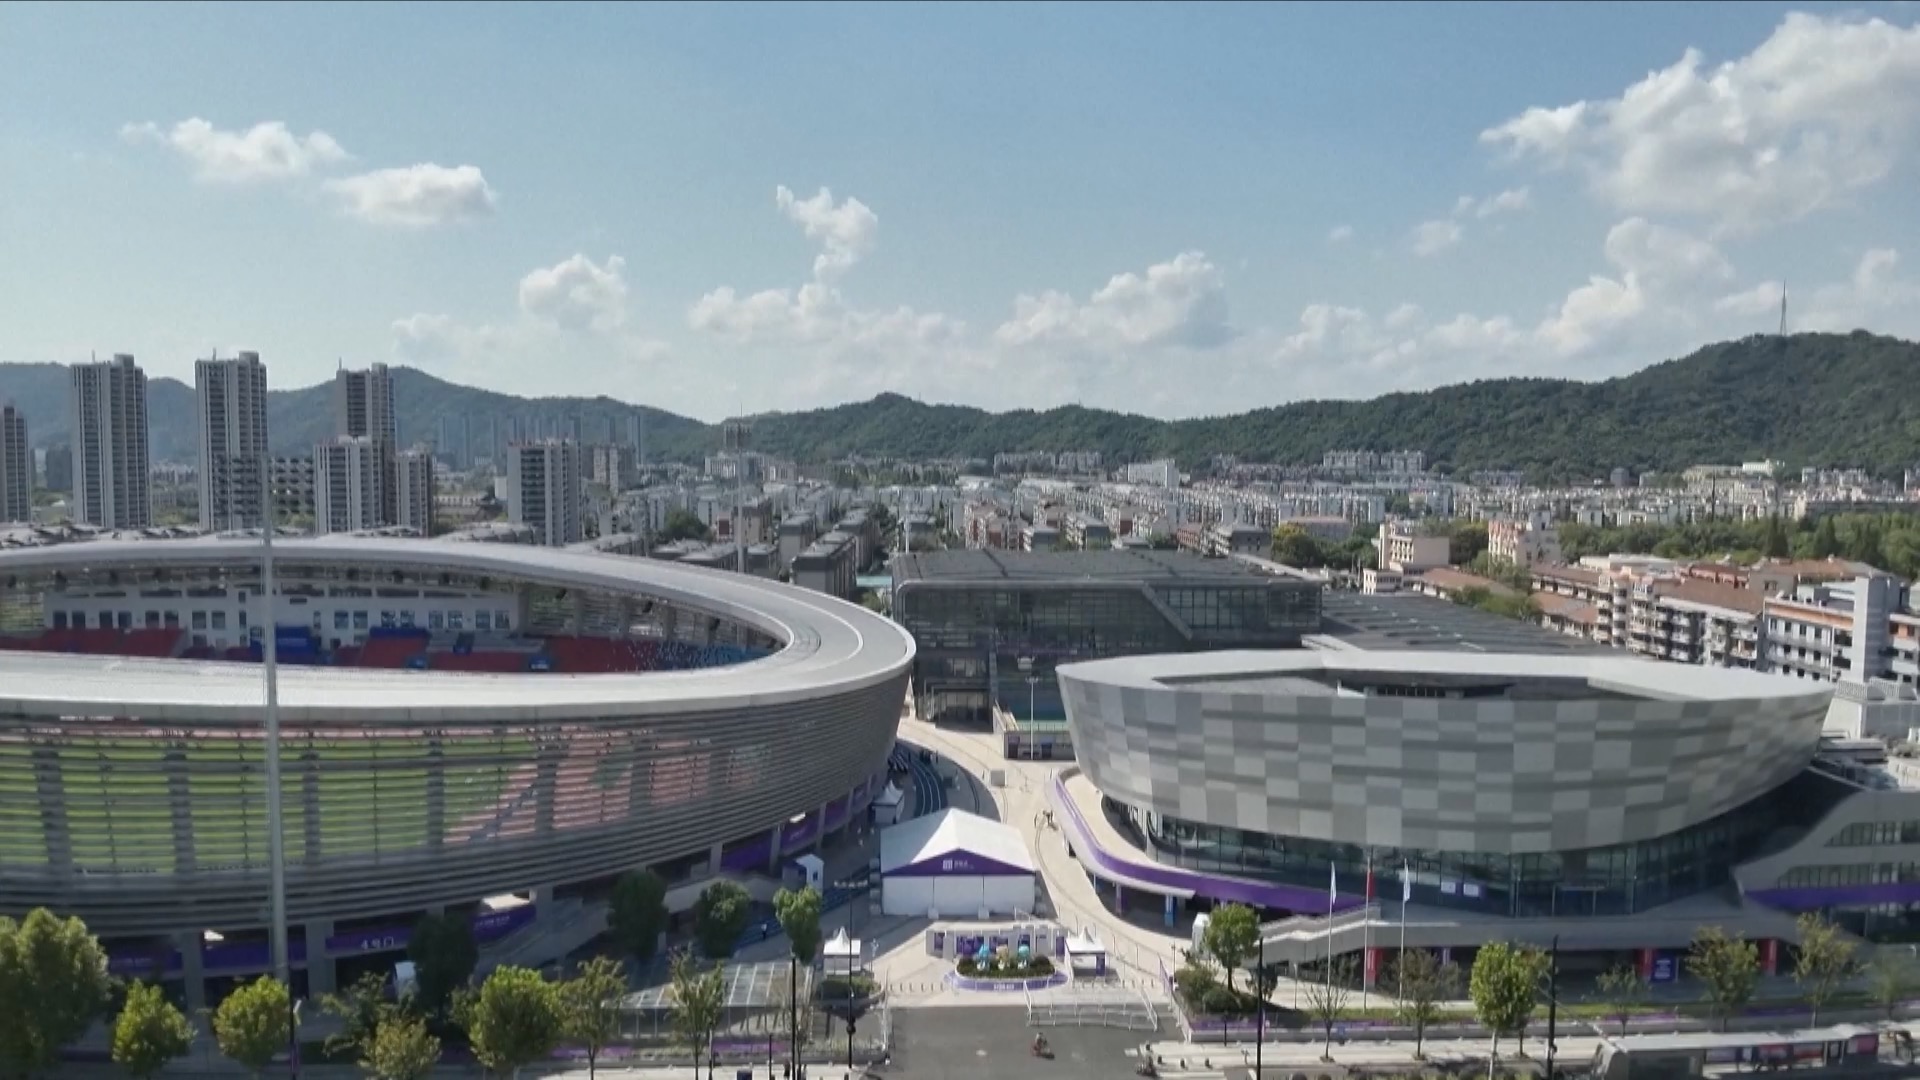 Venues Ready| Hangzhou organizers prepare venues for upcoming Asian Para Games